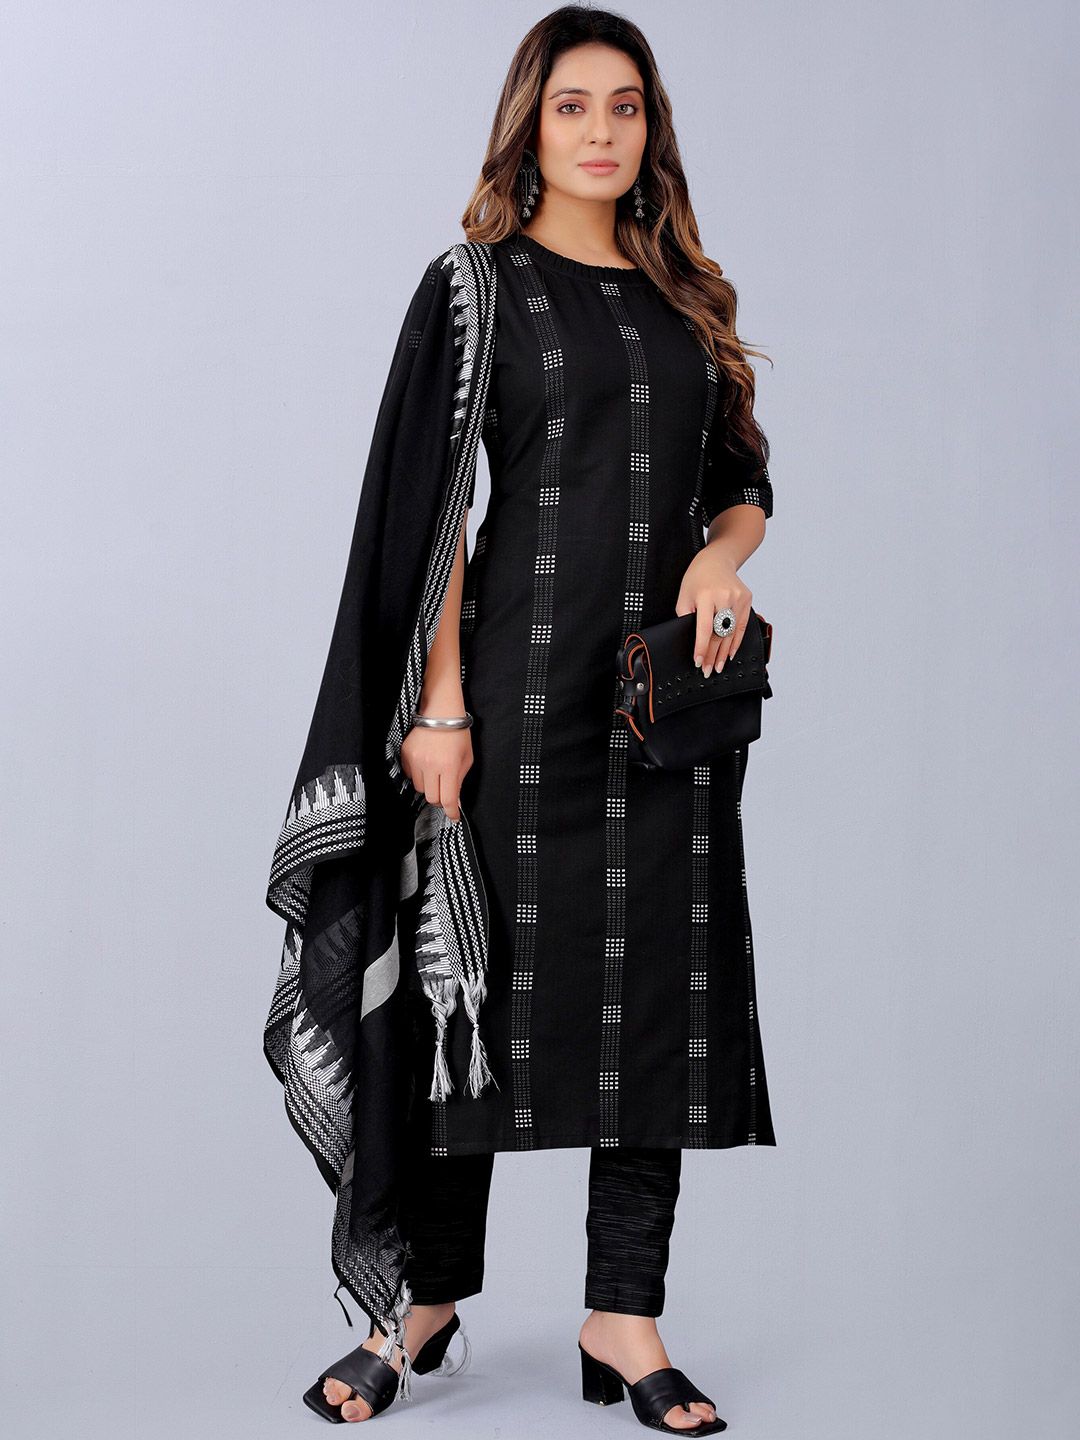 ASPORA Black & White Pure Cotton Unstitched Dress Material Price in India